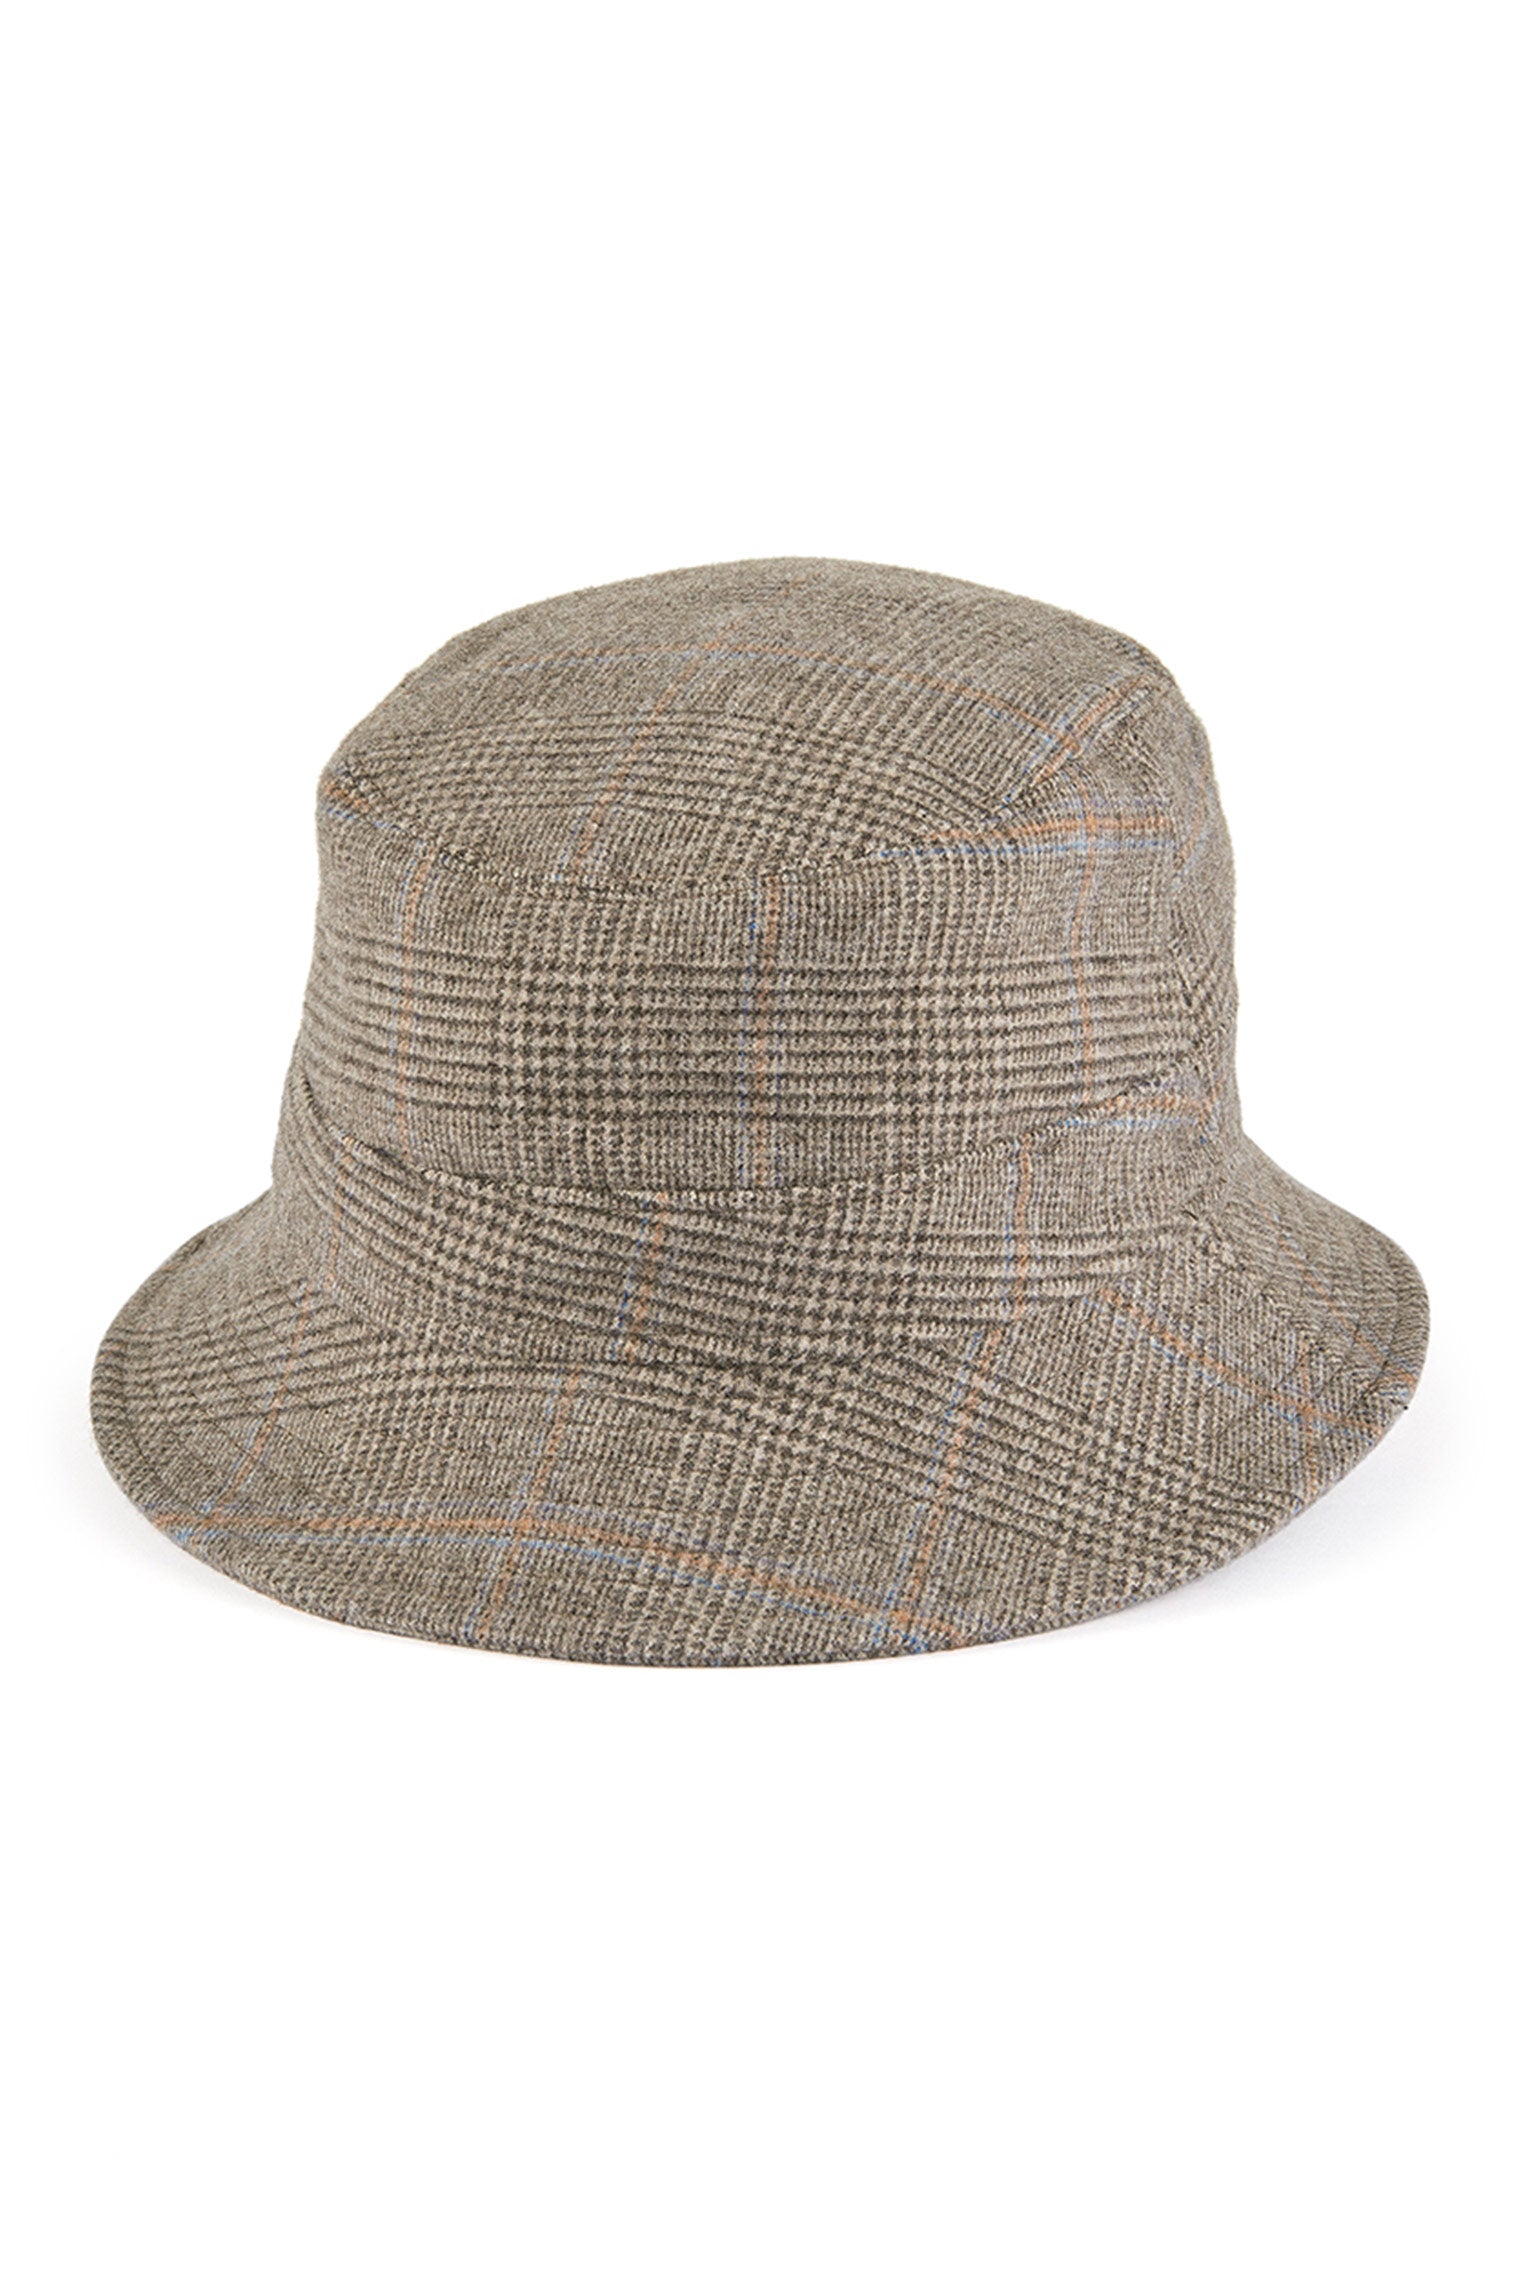 Escorial Wool Bucket Hat - Men’s Bucket Hats - Lock & Co. Hatters London UK